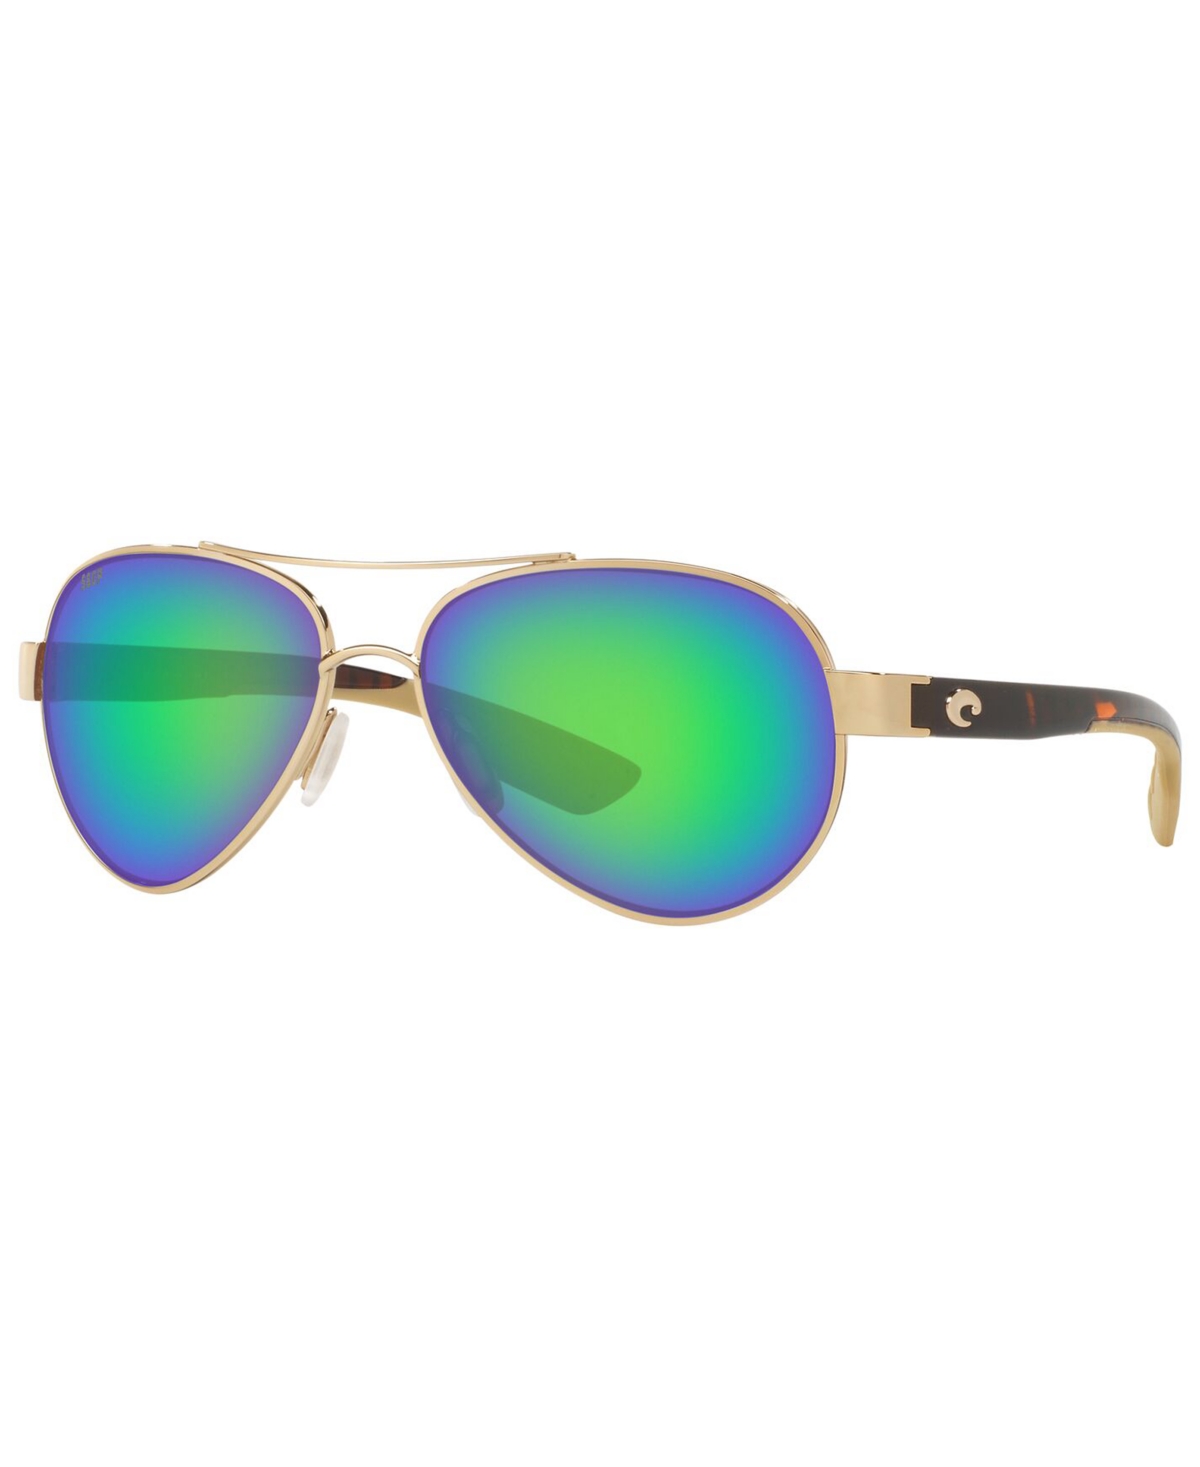 Unisex Polarized Sunglasses, Loreto - ROSE GOLD/GREEN MIR P